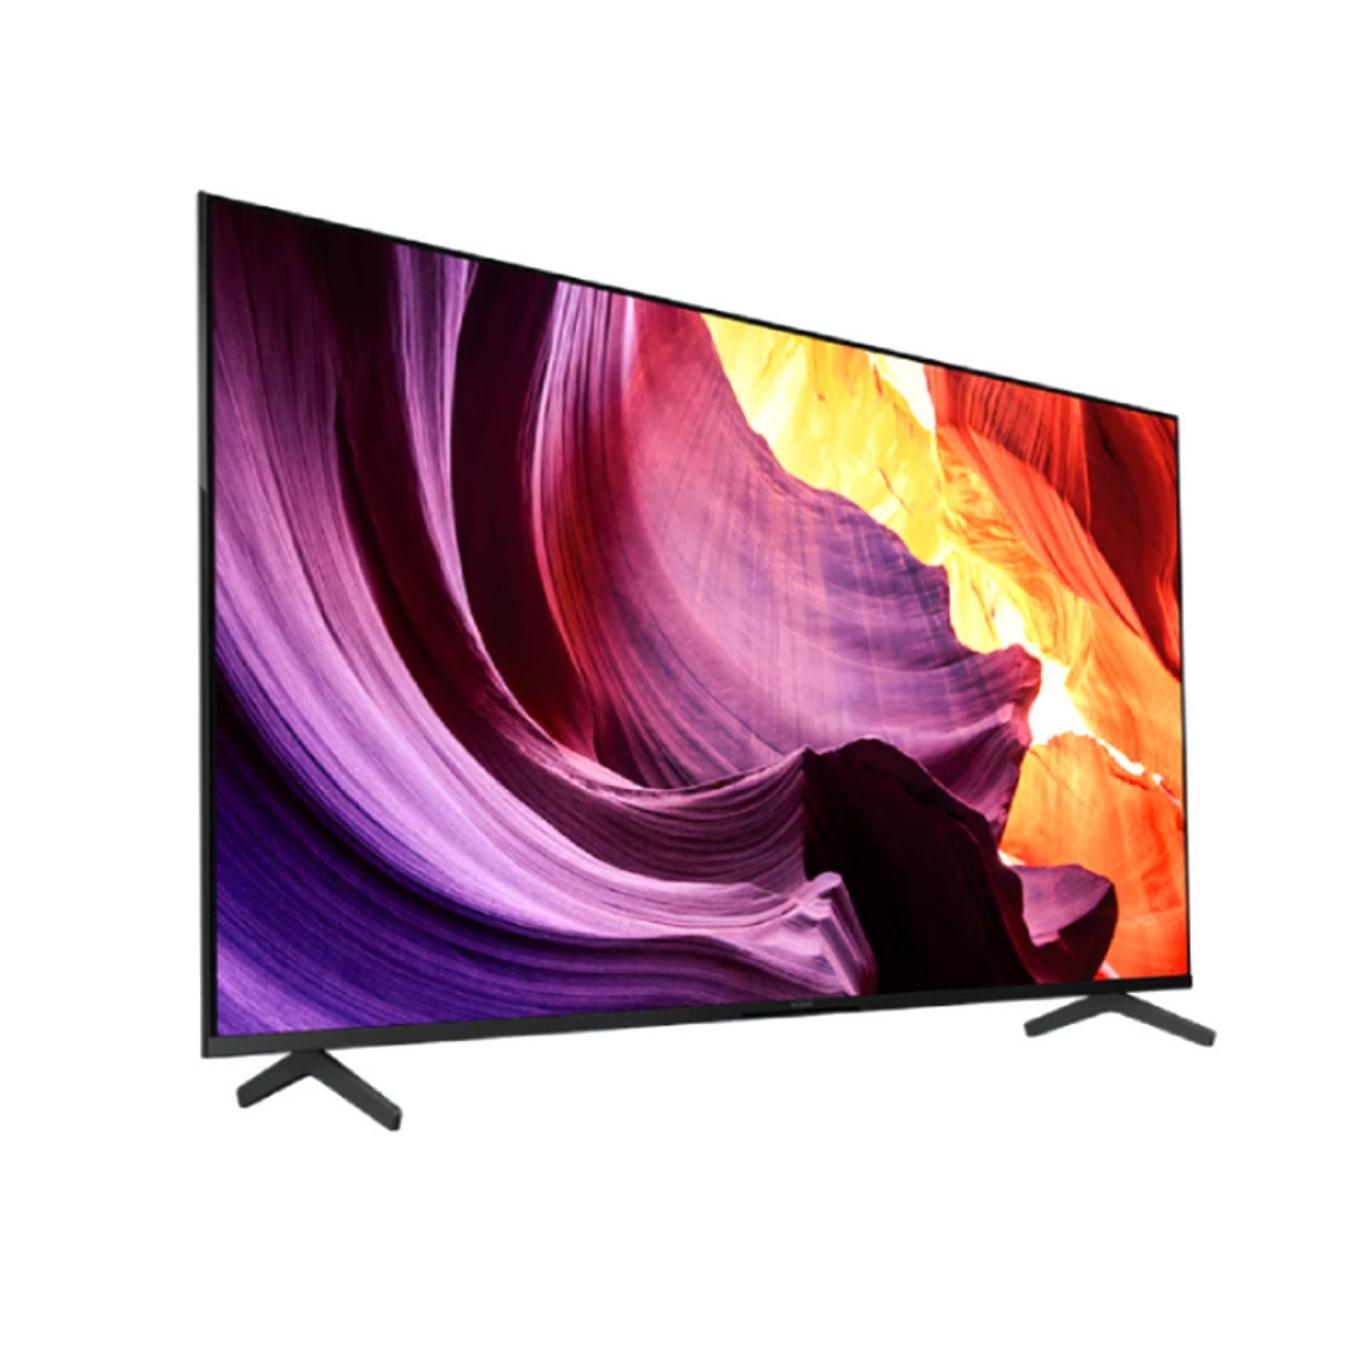 Sony Bravia 43 INCH W800C LED TV - AC MART BD : Best Price in Bangladesh